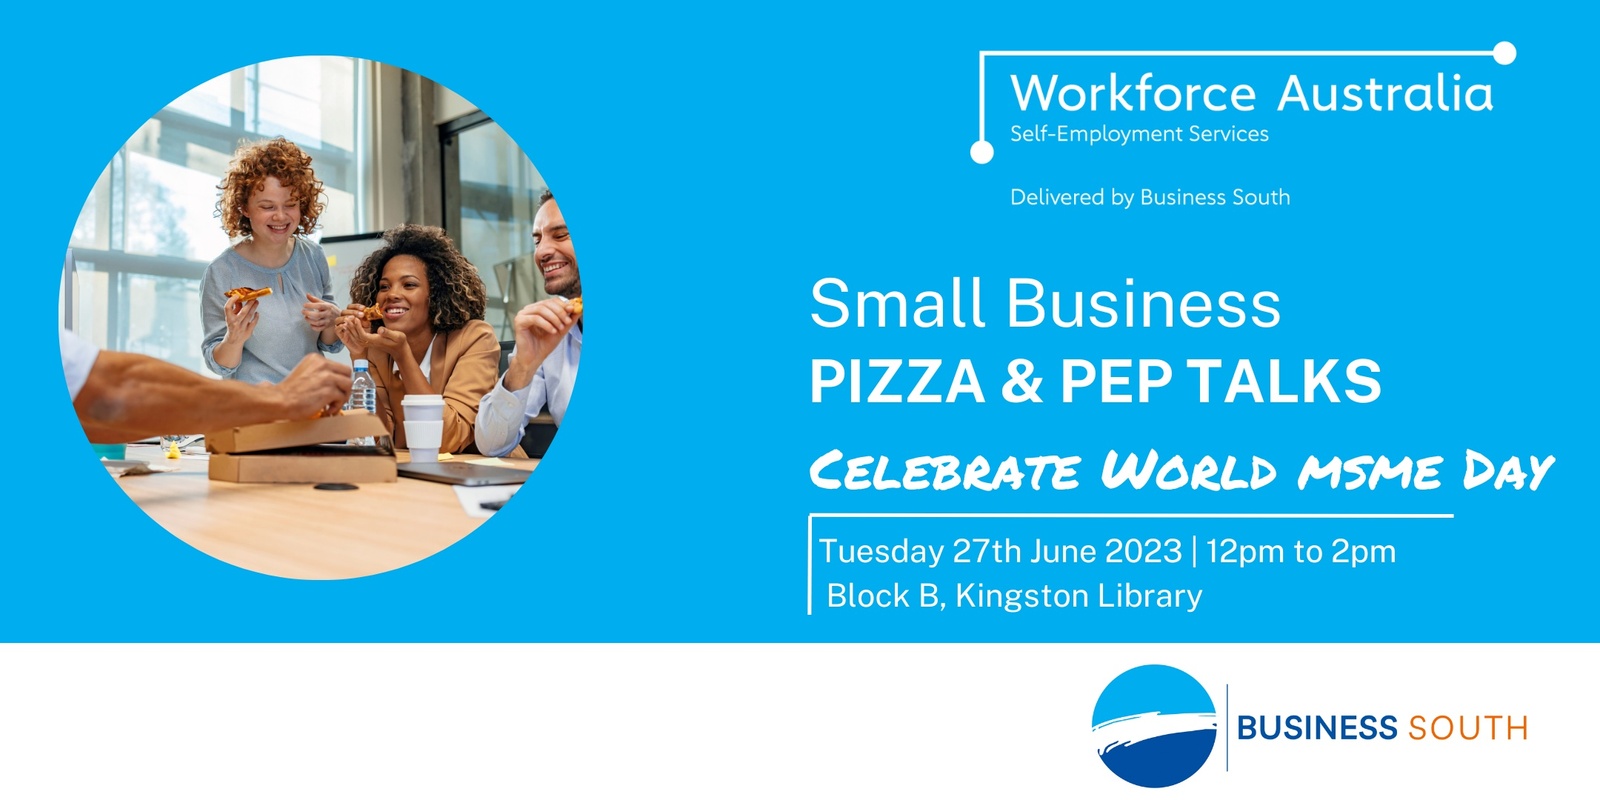 Small Business Pizza & Pep Talks